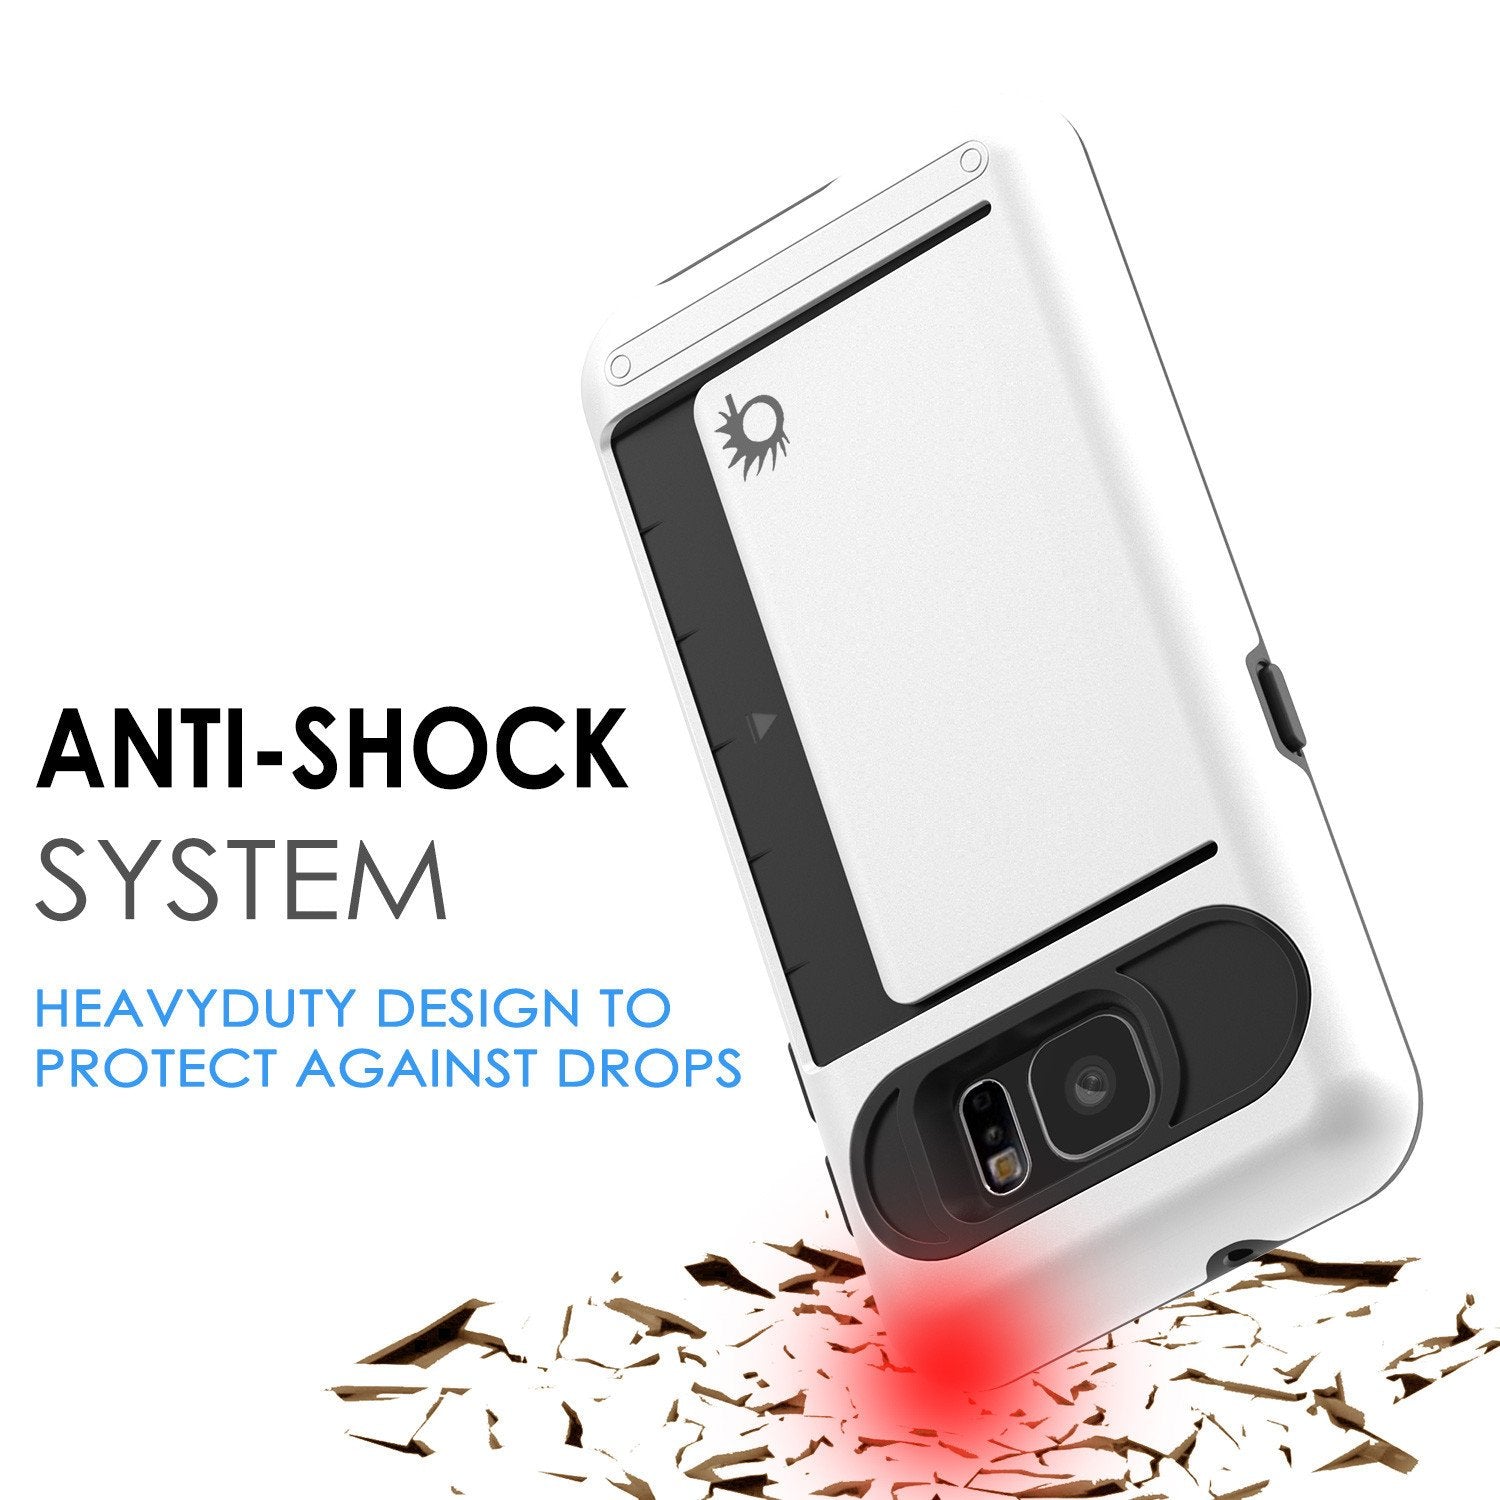 Galaxy S7 EDGE Case PunkCase CLUTCH White Series Slim Armor Soft Cover Case w/ Screen Protector